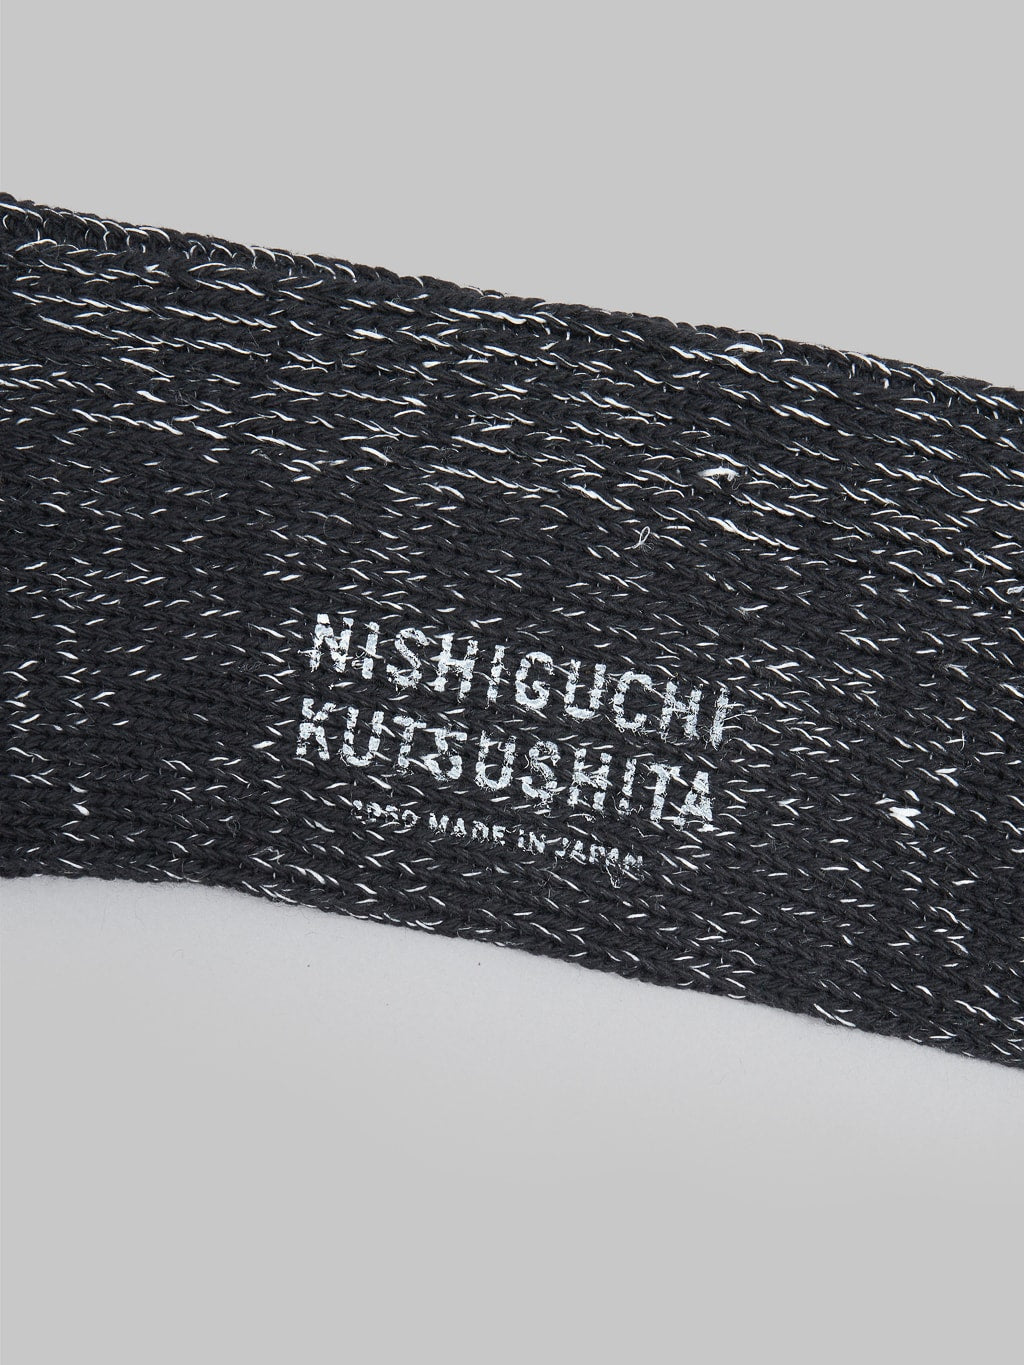 Nishiguchi Kutsushita Hemp Cotton Socks Black Brand Logo